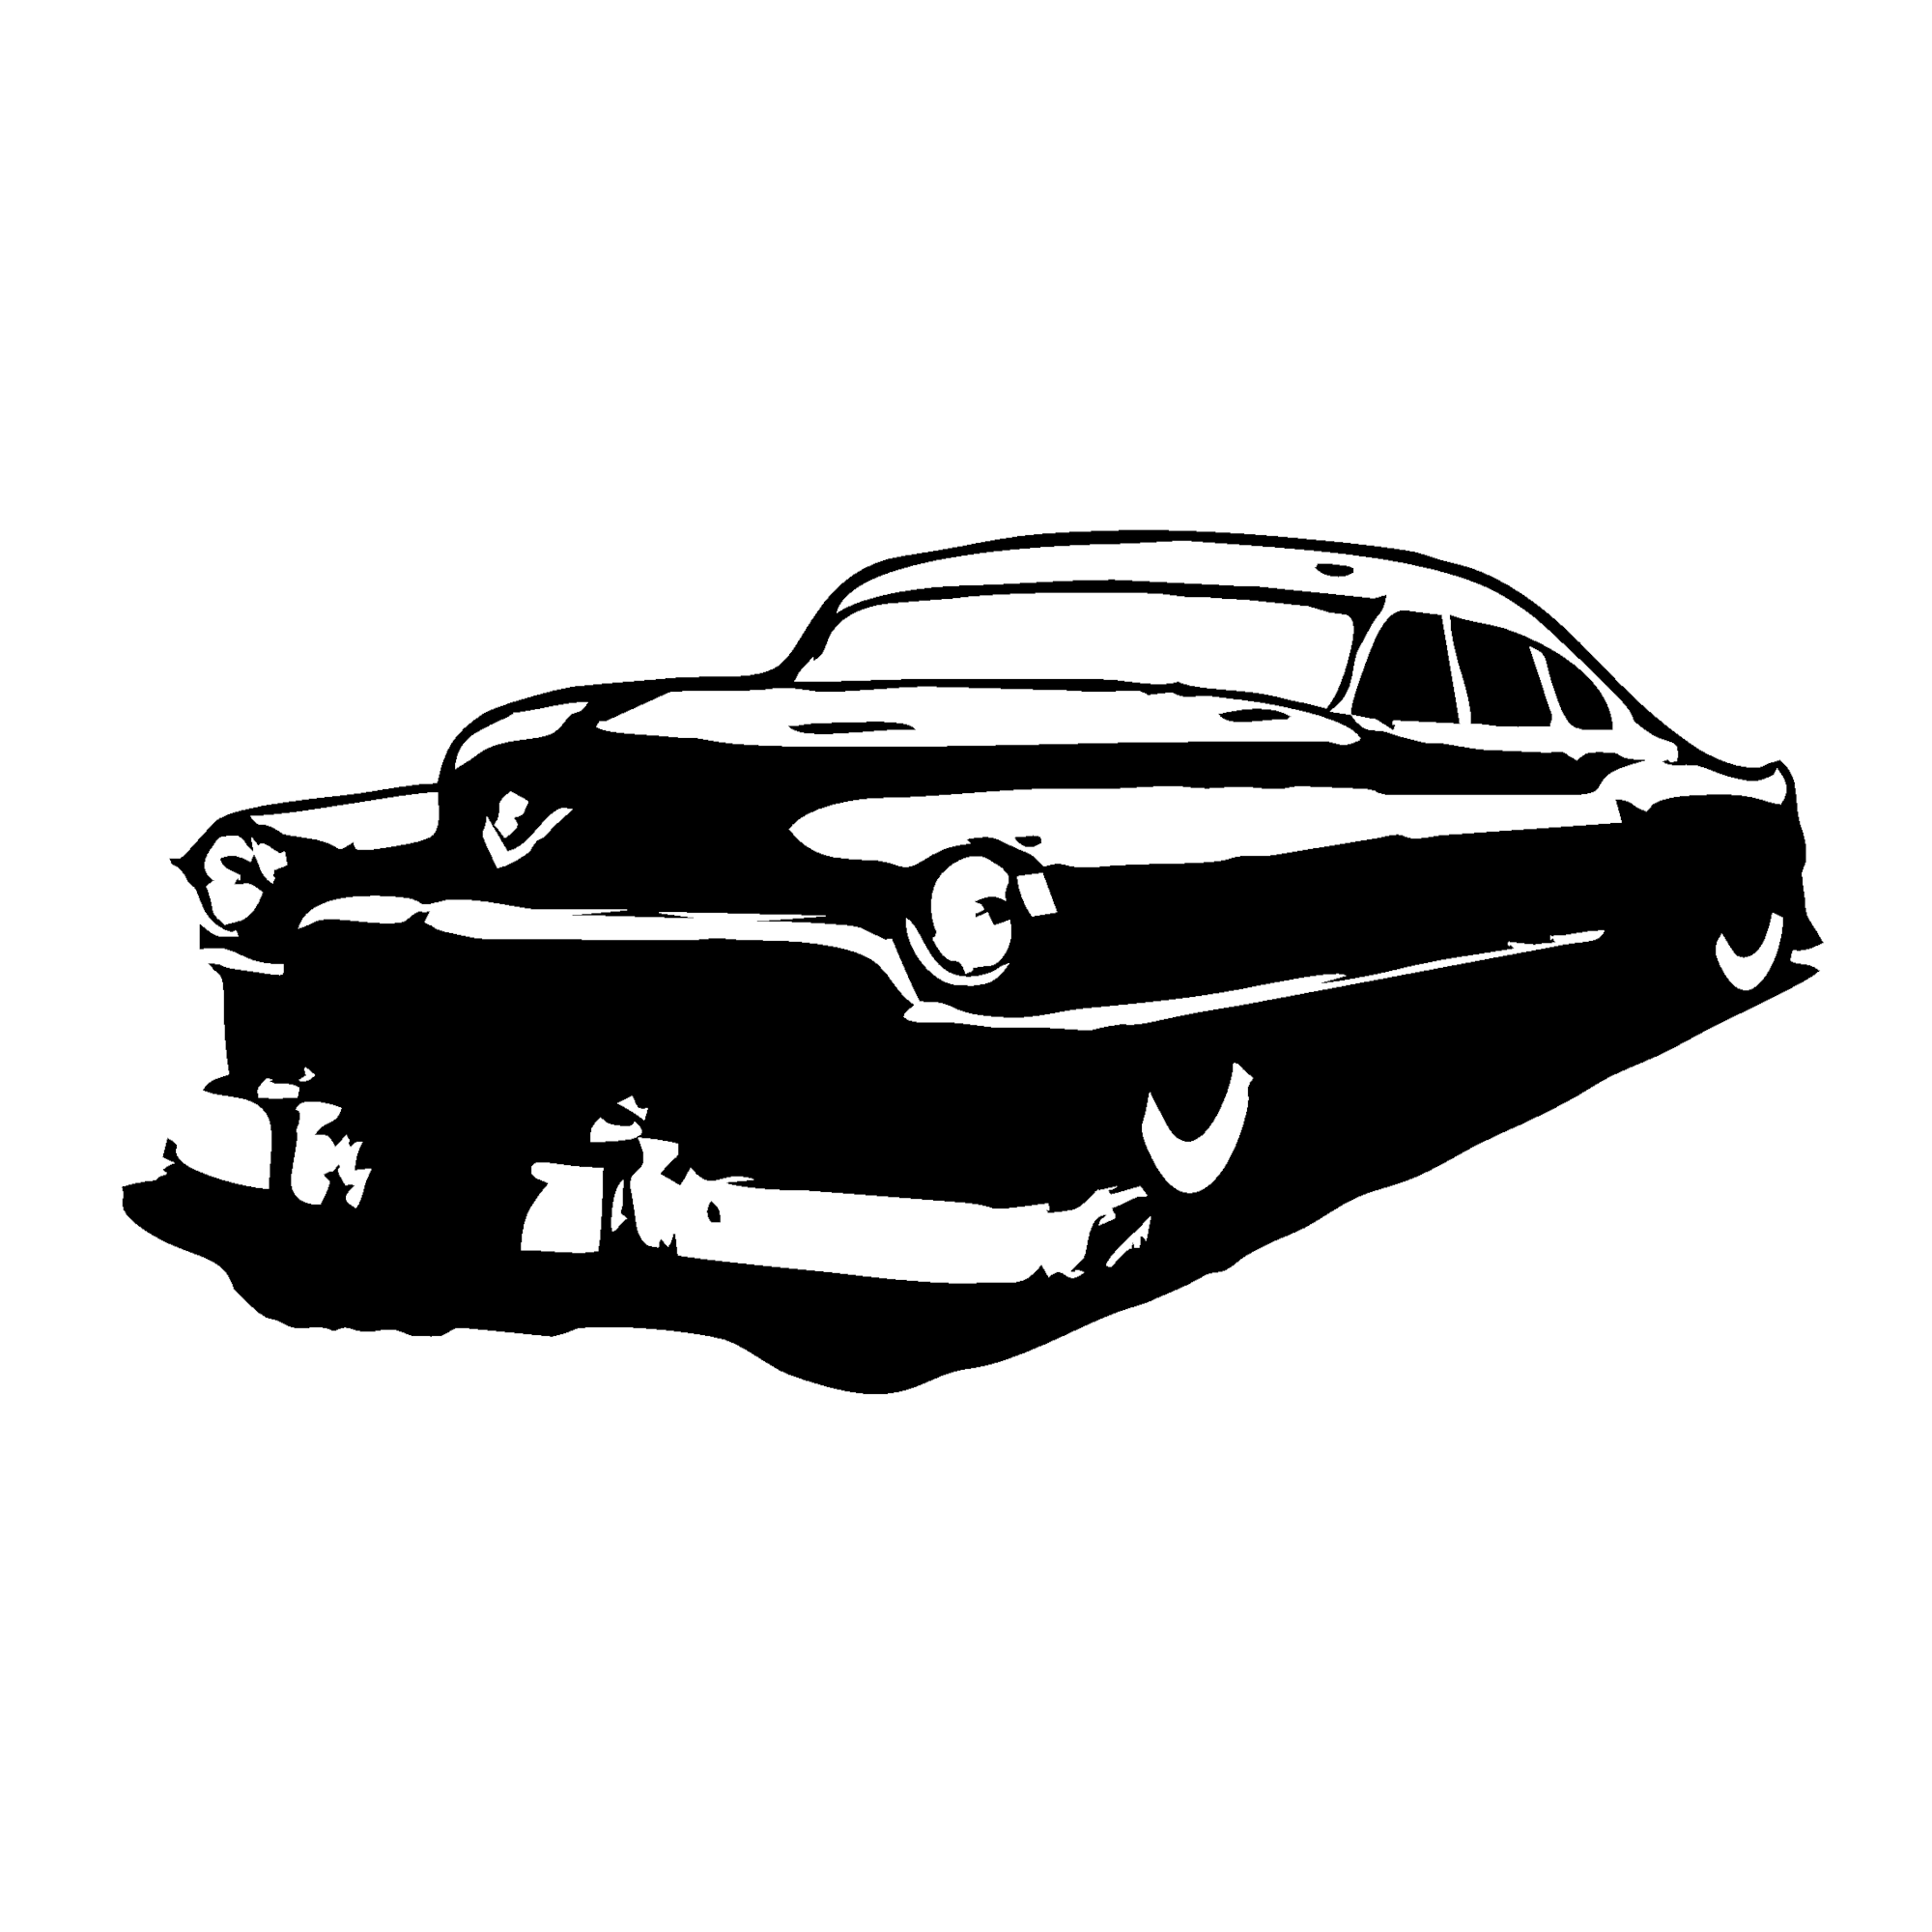 1951 Cadillac Lead Sled